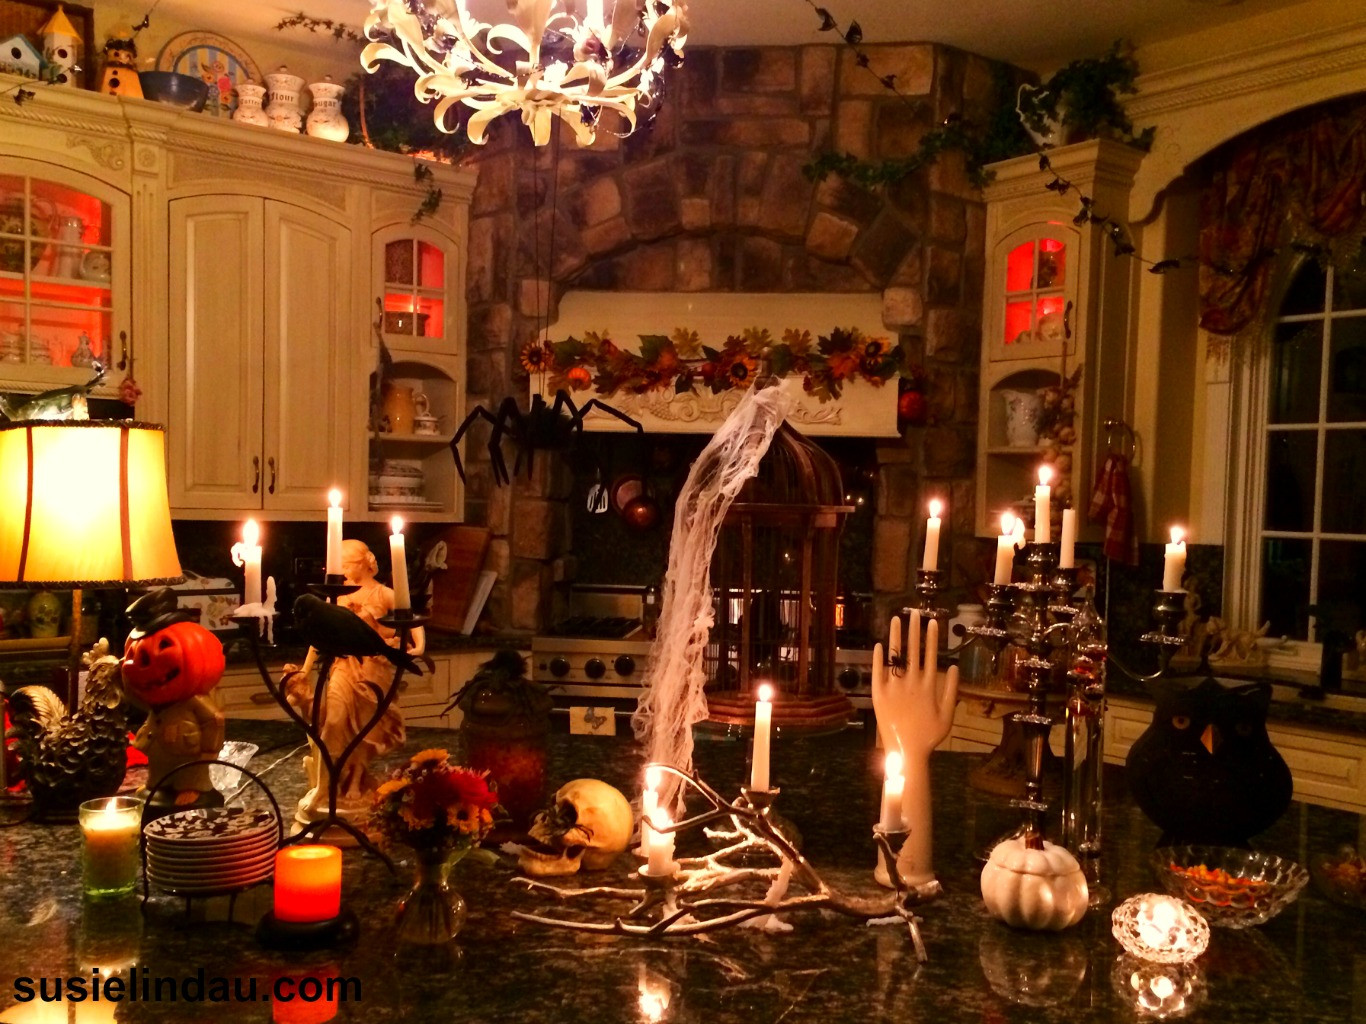 Halloween Kitchen Decorations
 Getting My Creepy – Susie Lindau s Wild Ride